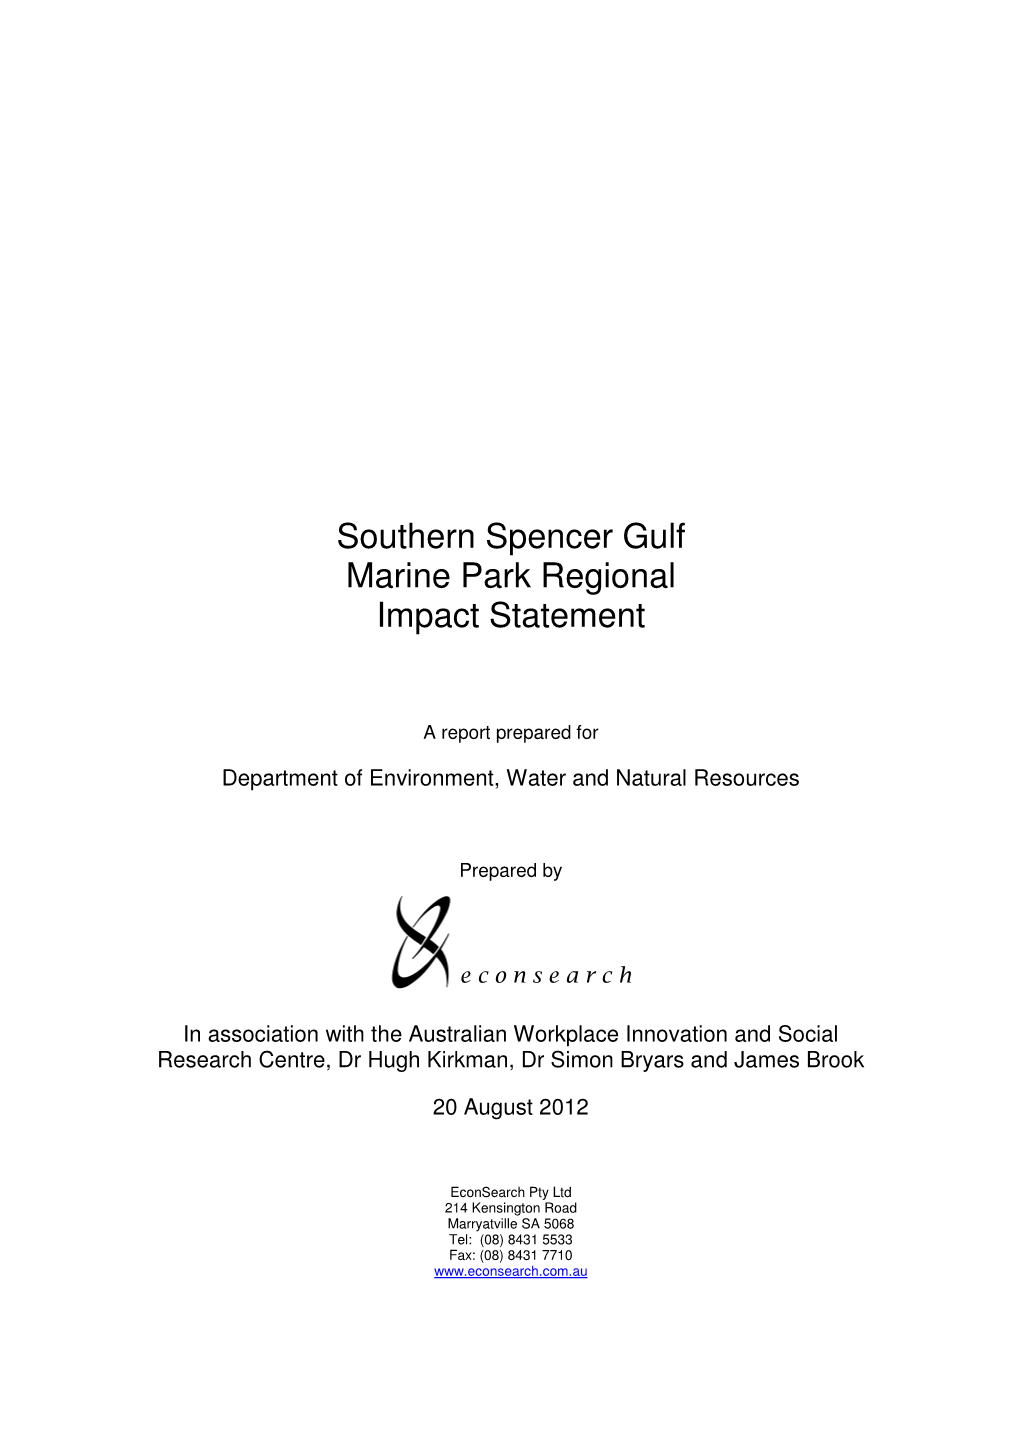 Southern Spencer Gulf Marine Park Regional Impact Statement